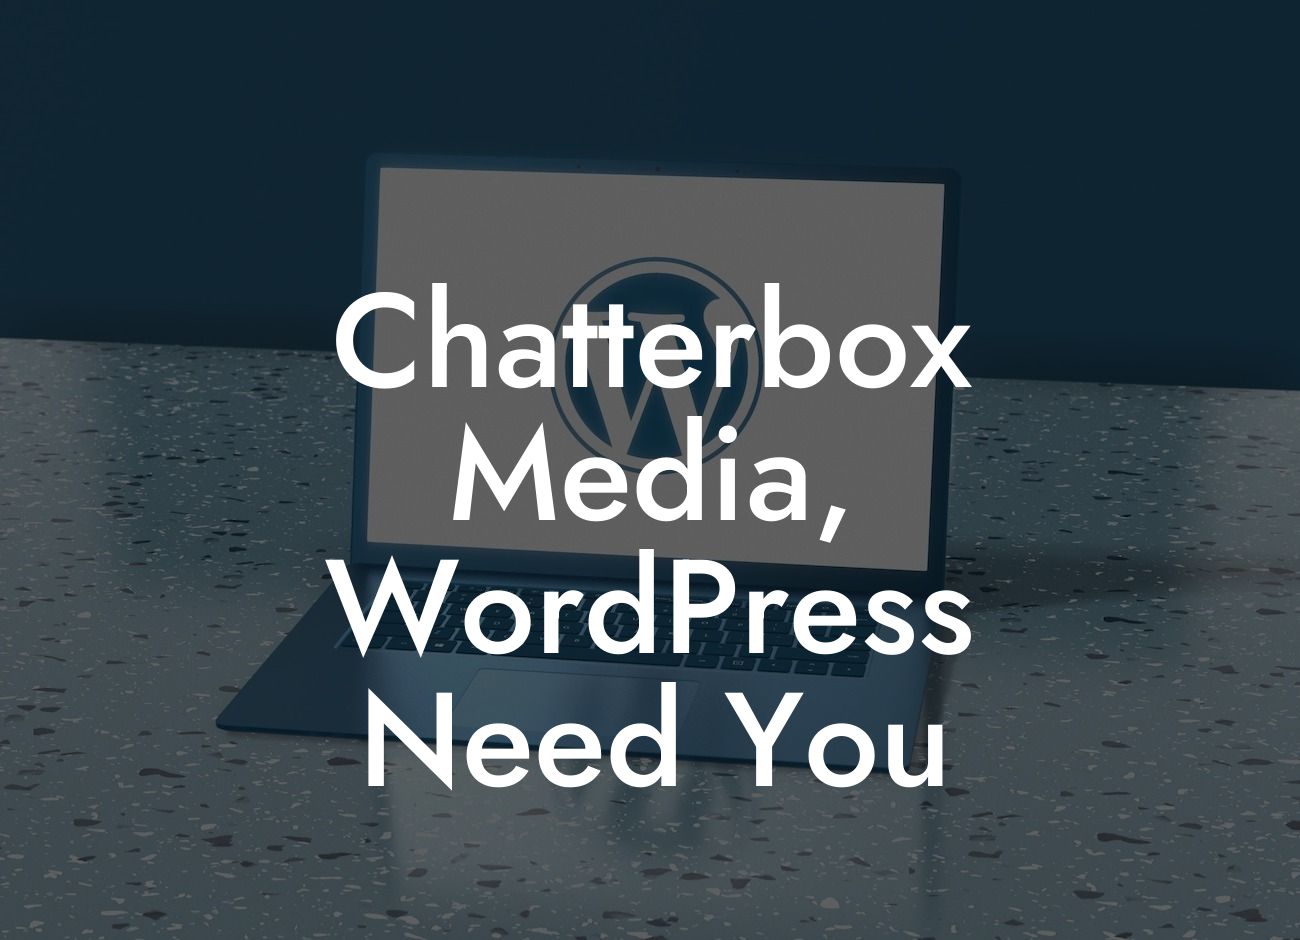 Chatterbox Media, WordPress Need You